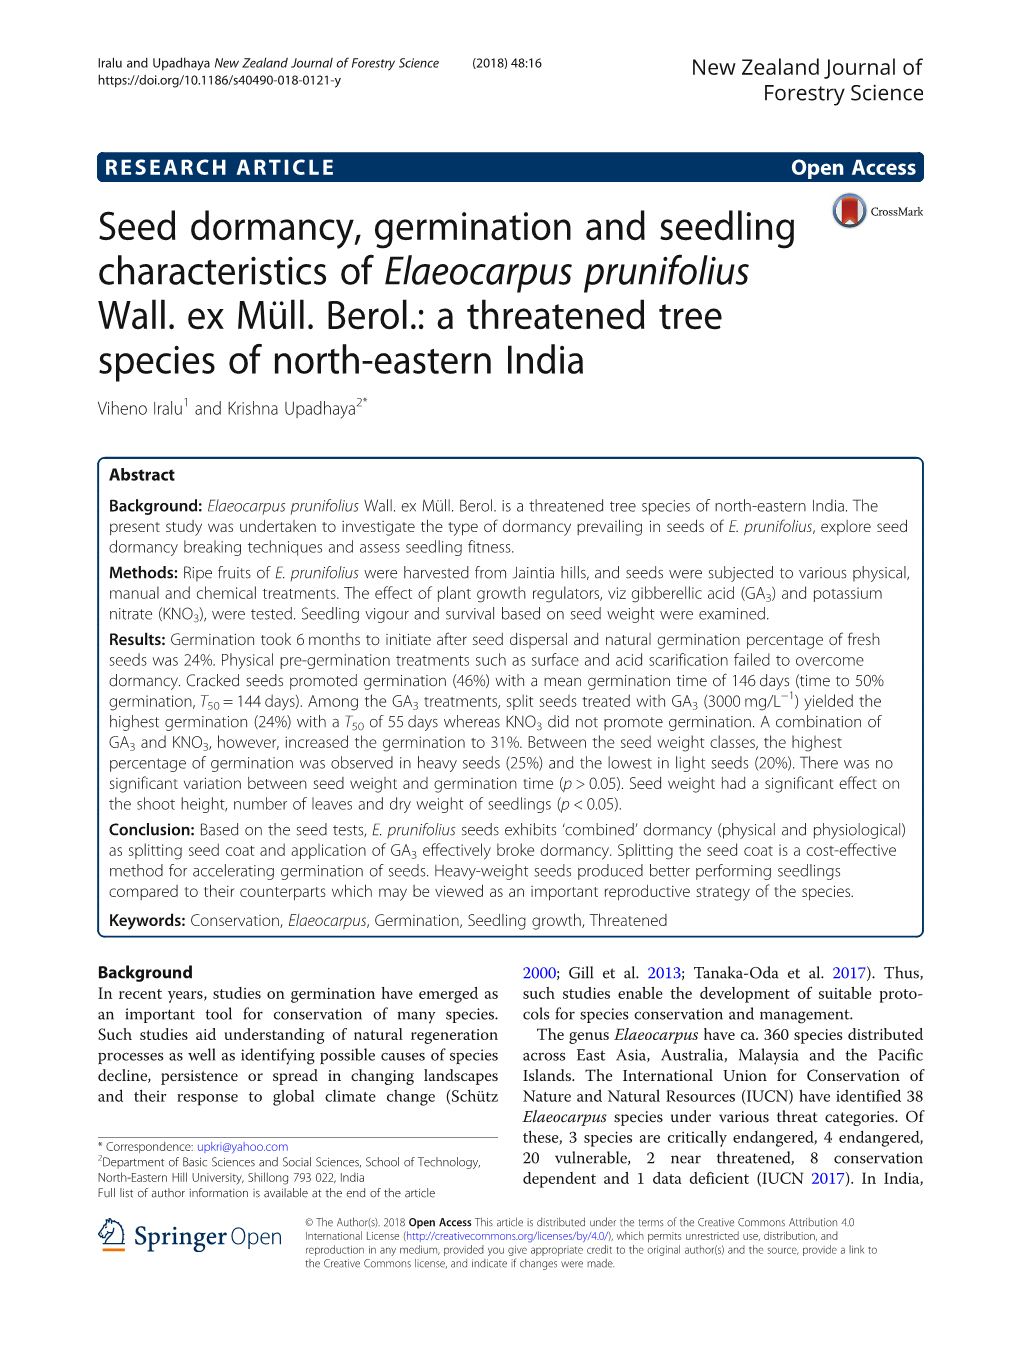 Seed Dormancy, Germination and Seedling Characteristics of Elaeocarpus Prunifolius Wall